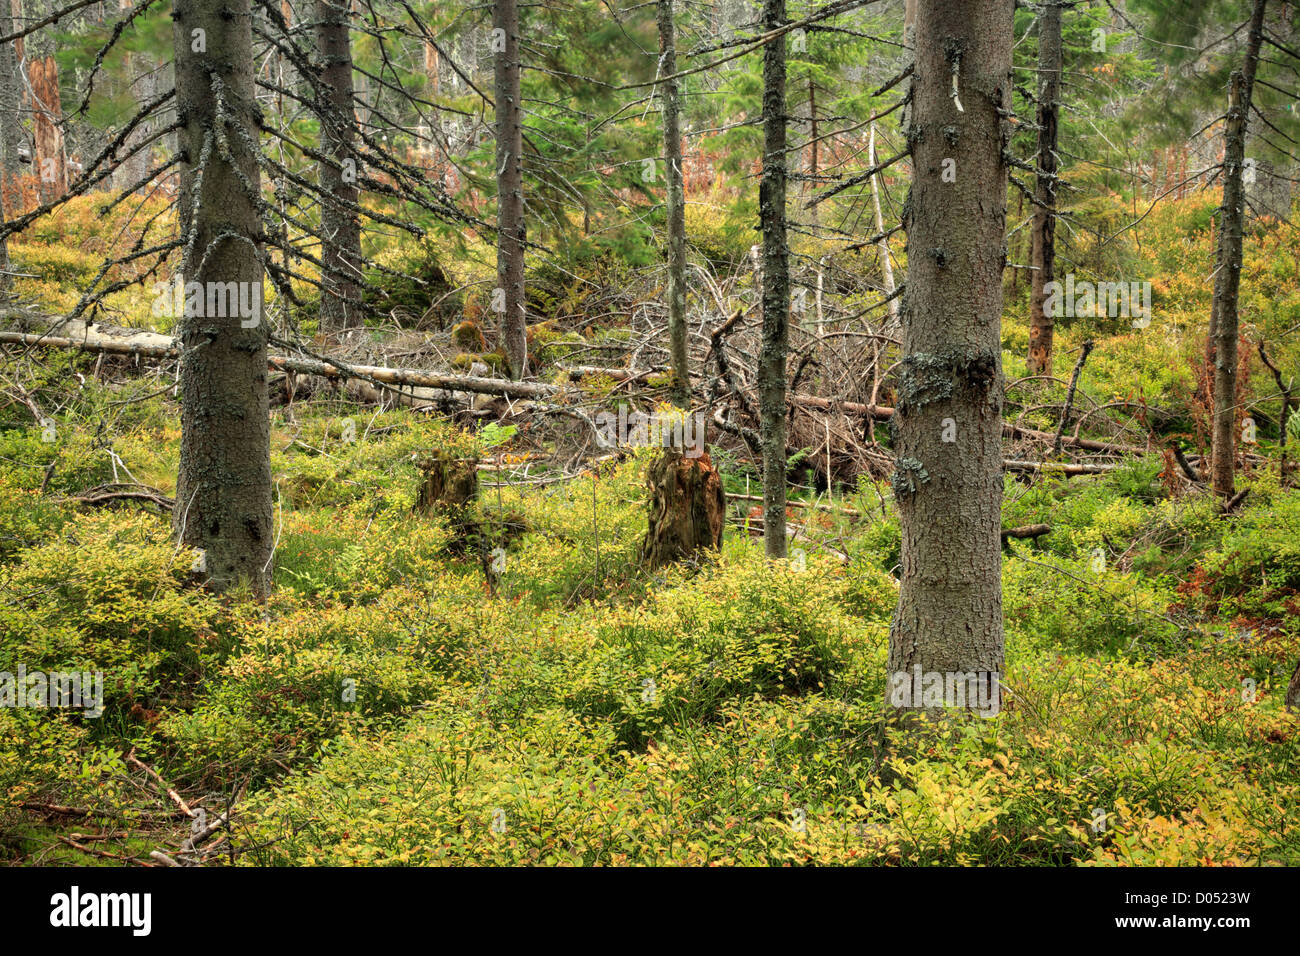 Pine forest in the Tatras Mountain region of Slovakia Stock Photo